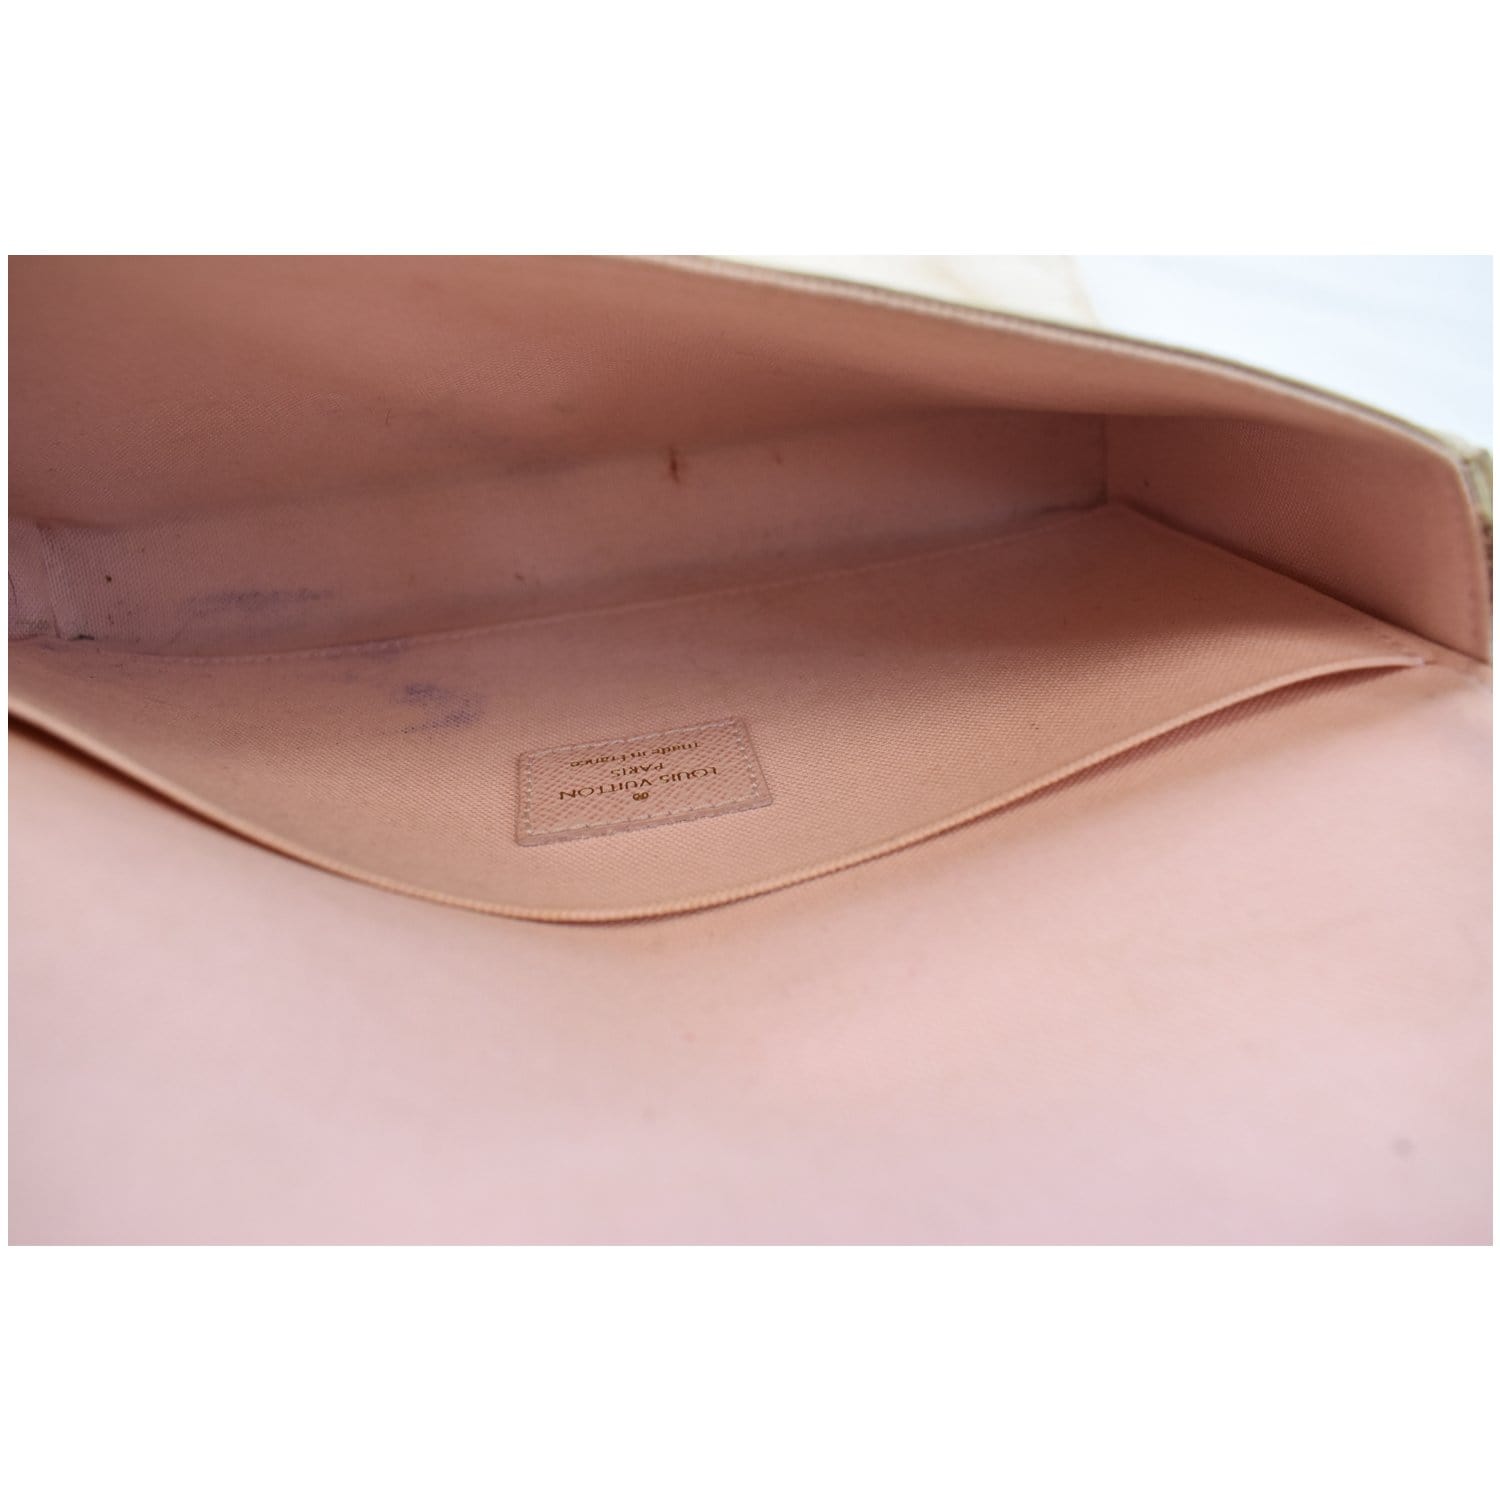 Louis Vuitton Pochette Felicie White Damier Azur Canvas Cross Body Bag -  Tradesy